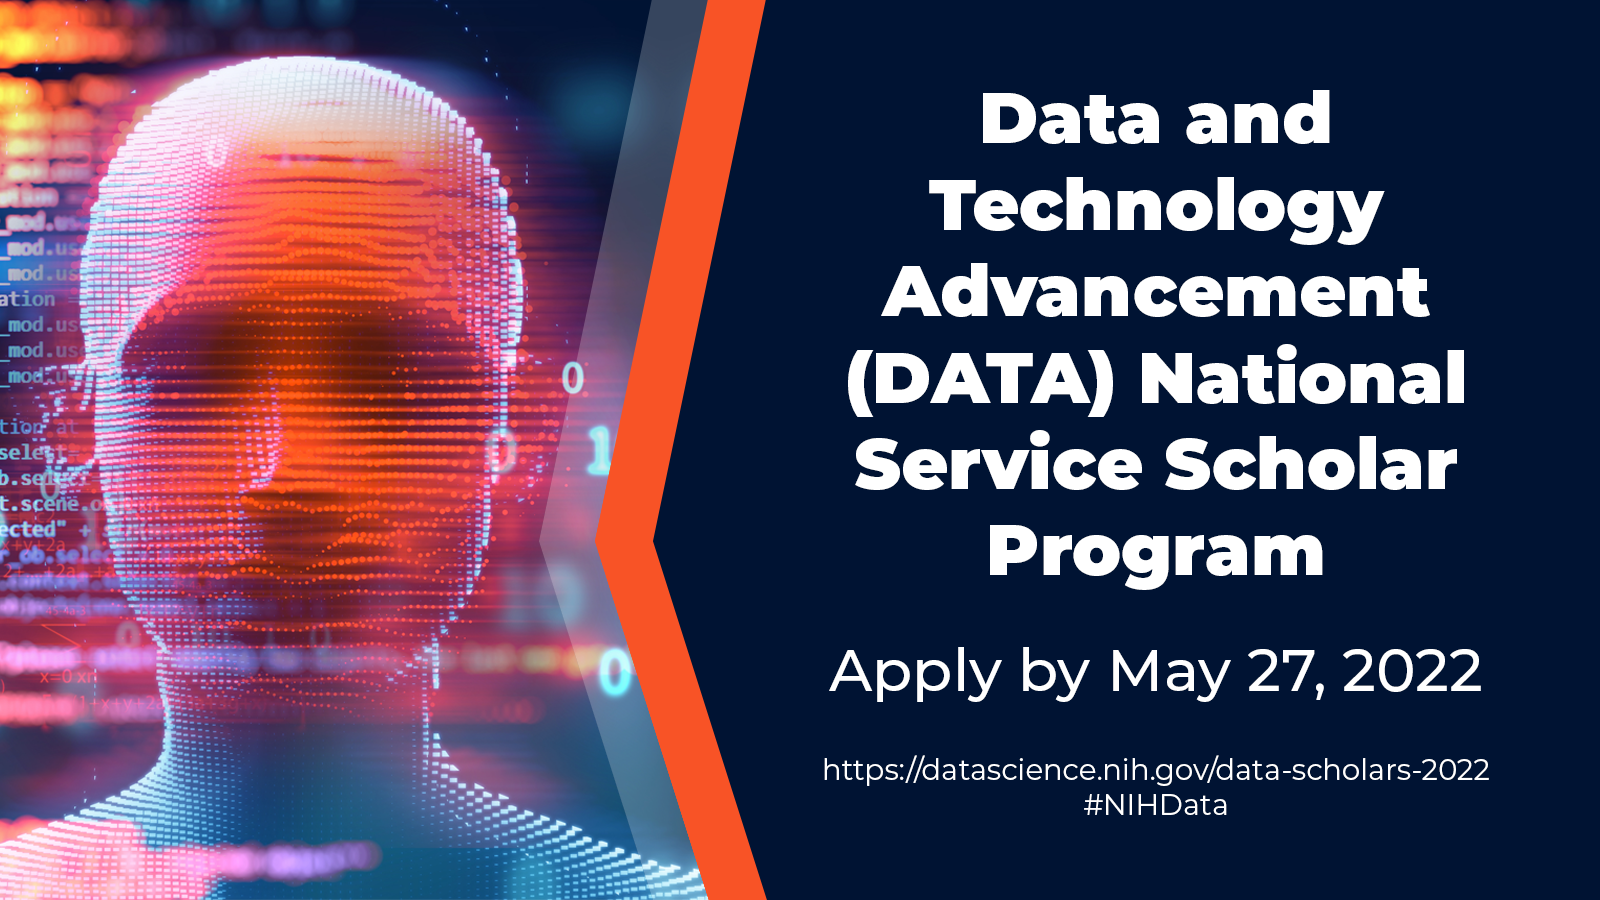 Data and Technology Advancement (DATA) National Service Scholar Program Apply by May 27, 2022 https://datascience.nih.gov/data-scholars-2022 #NIHData